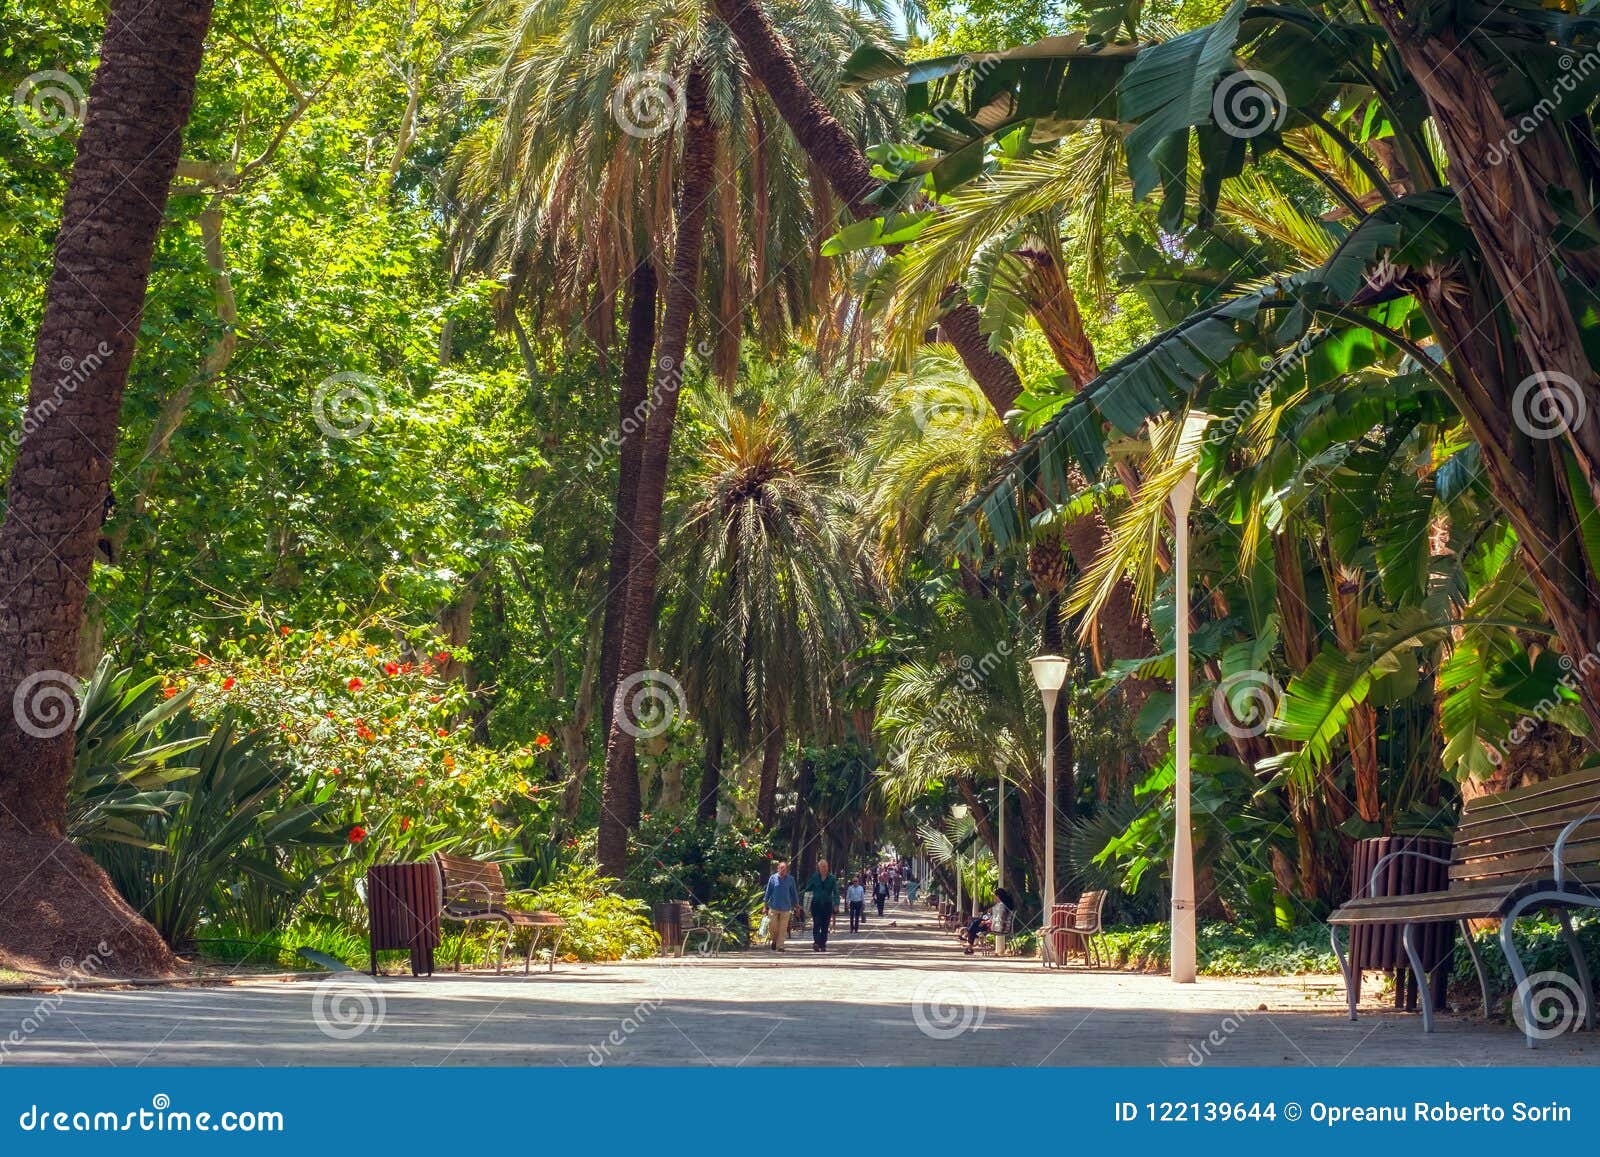 paseo del parque in malaga, costa del sol, spain